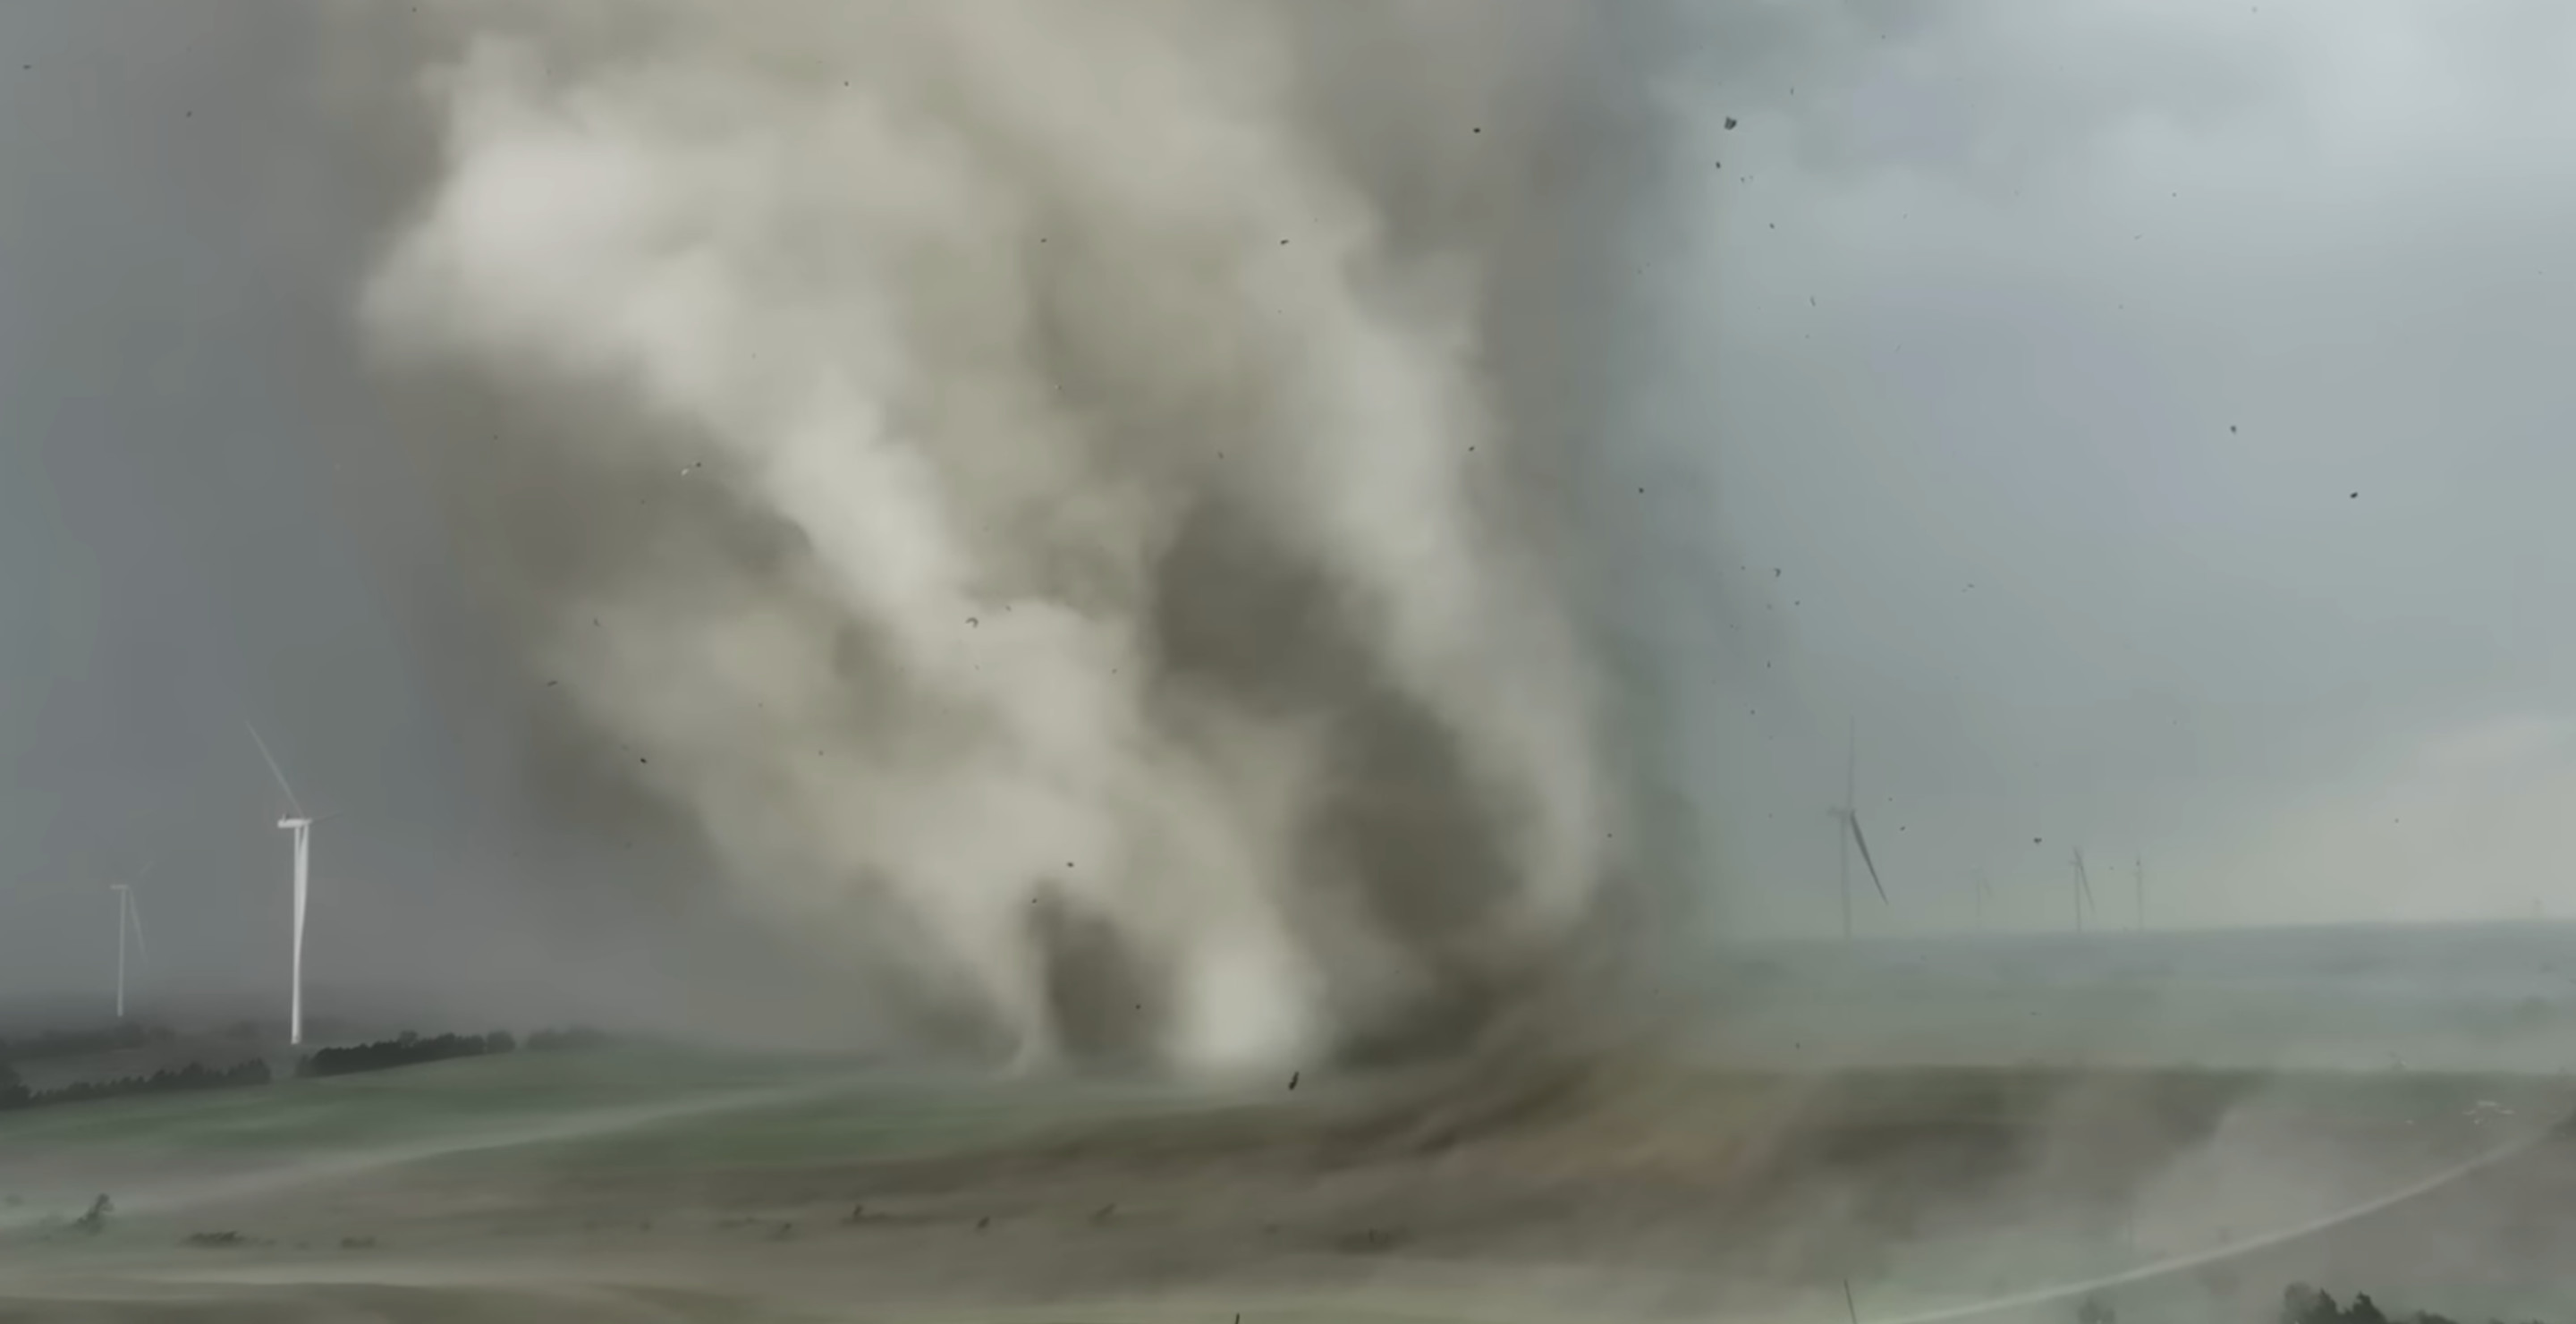 Chilling Videos Show Utter Devastation After Deadly Iowa Tornado